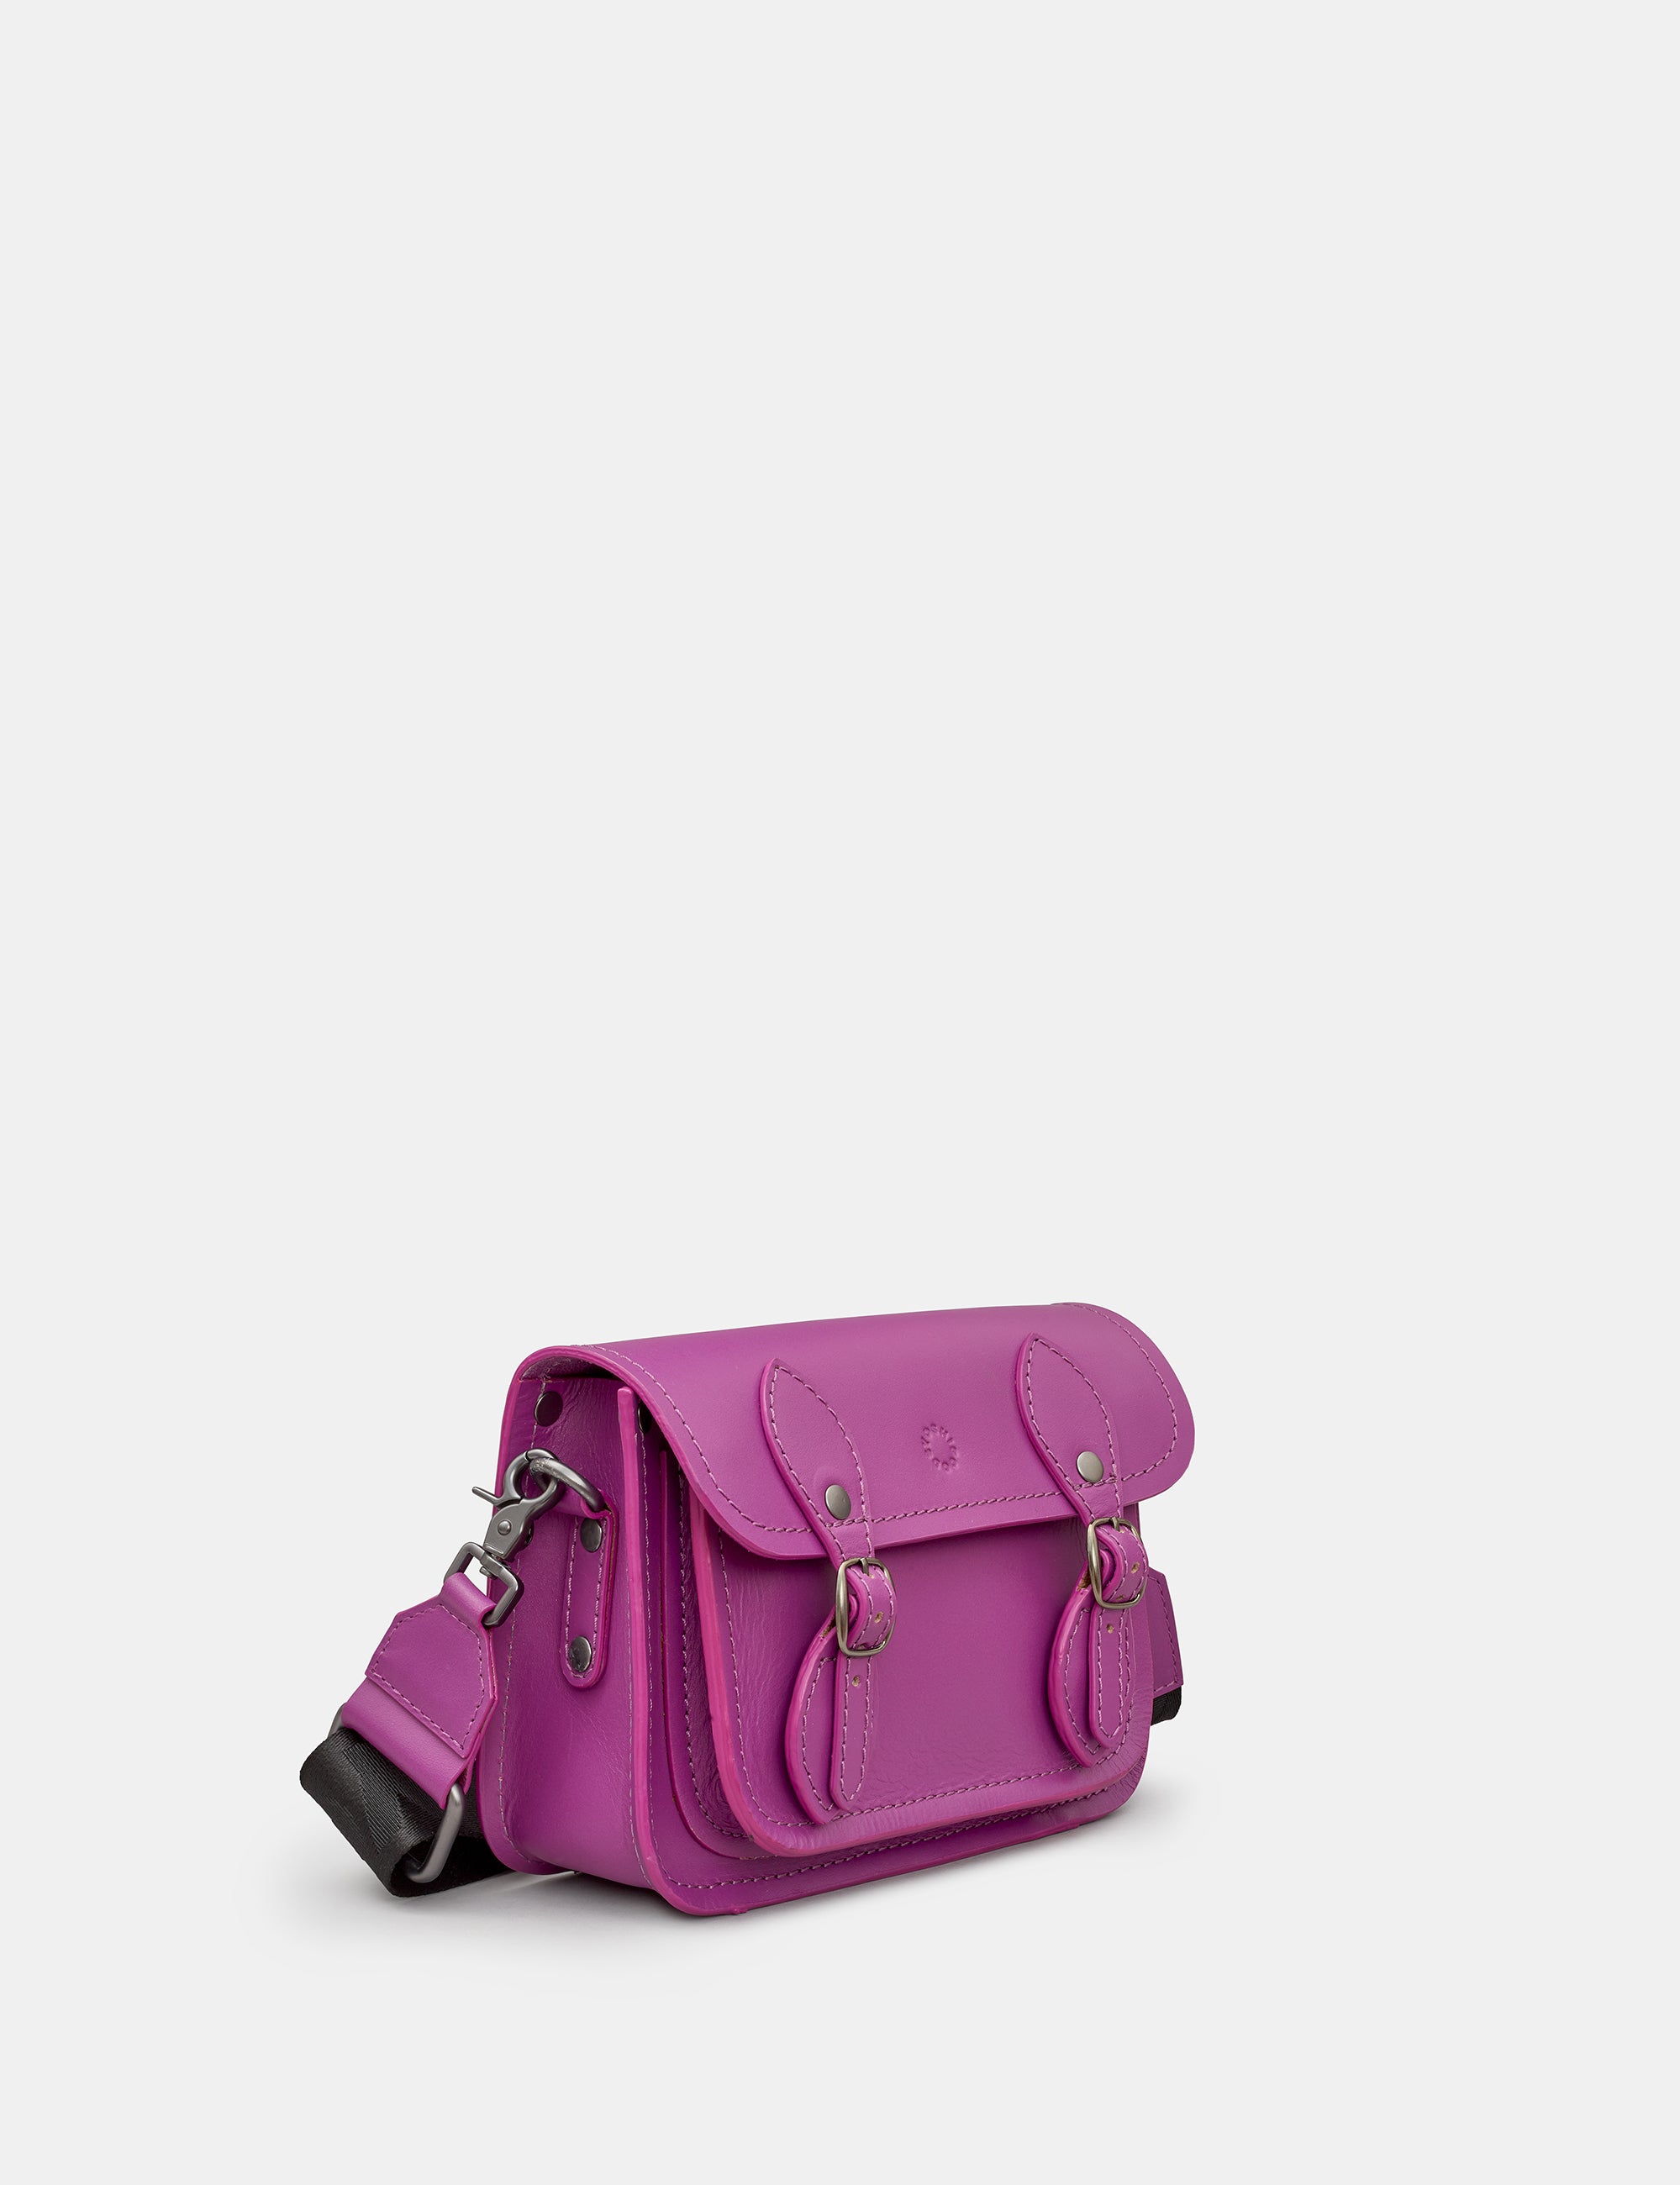 Tilney Purple Leather Mini Satchel | Cross Body Bag | Handbag by Yoshi ...